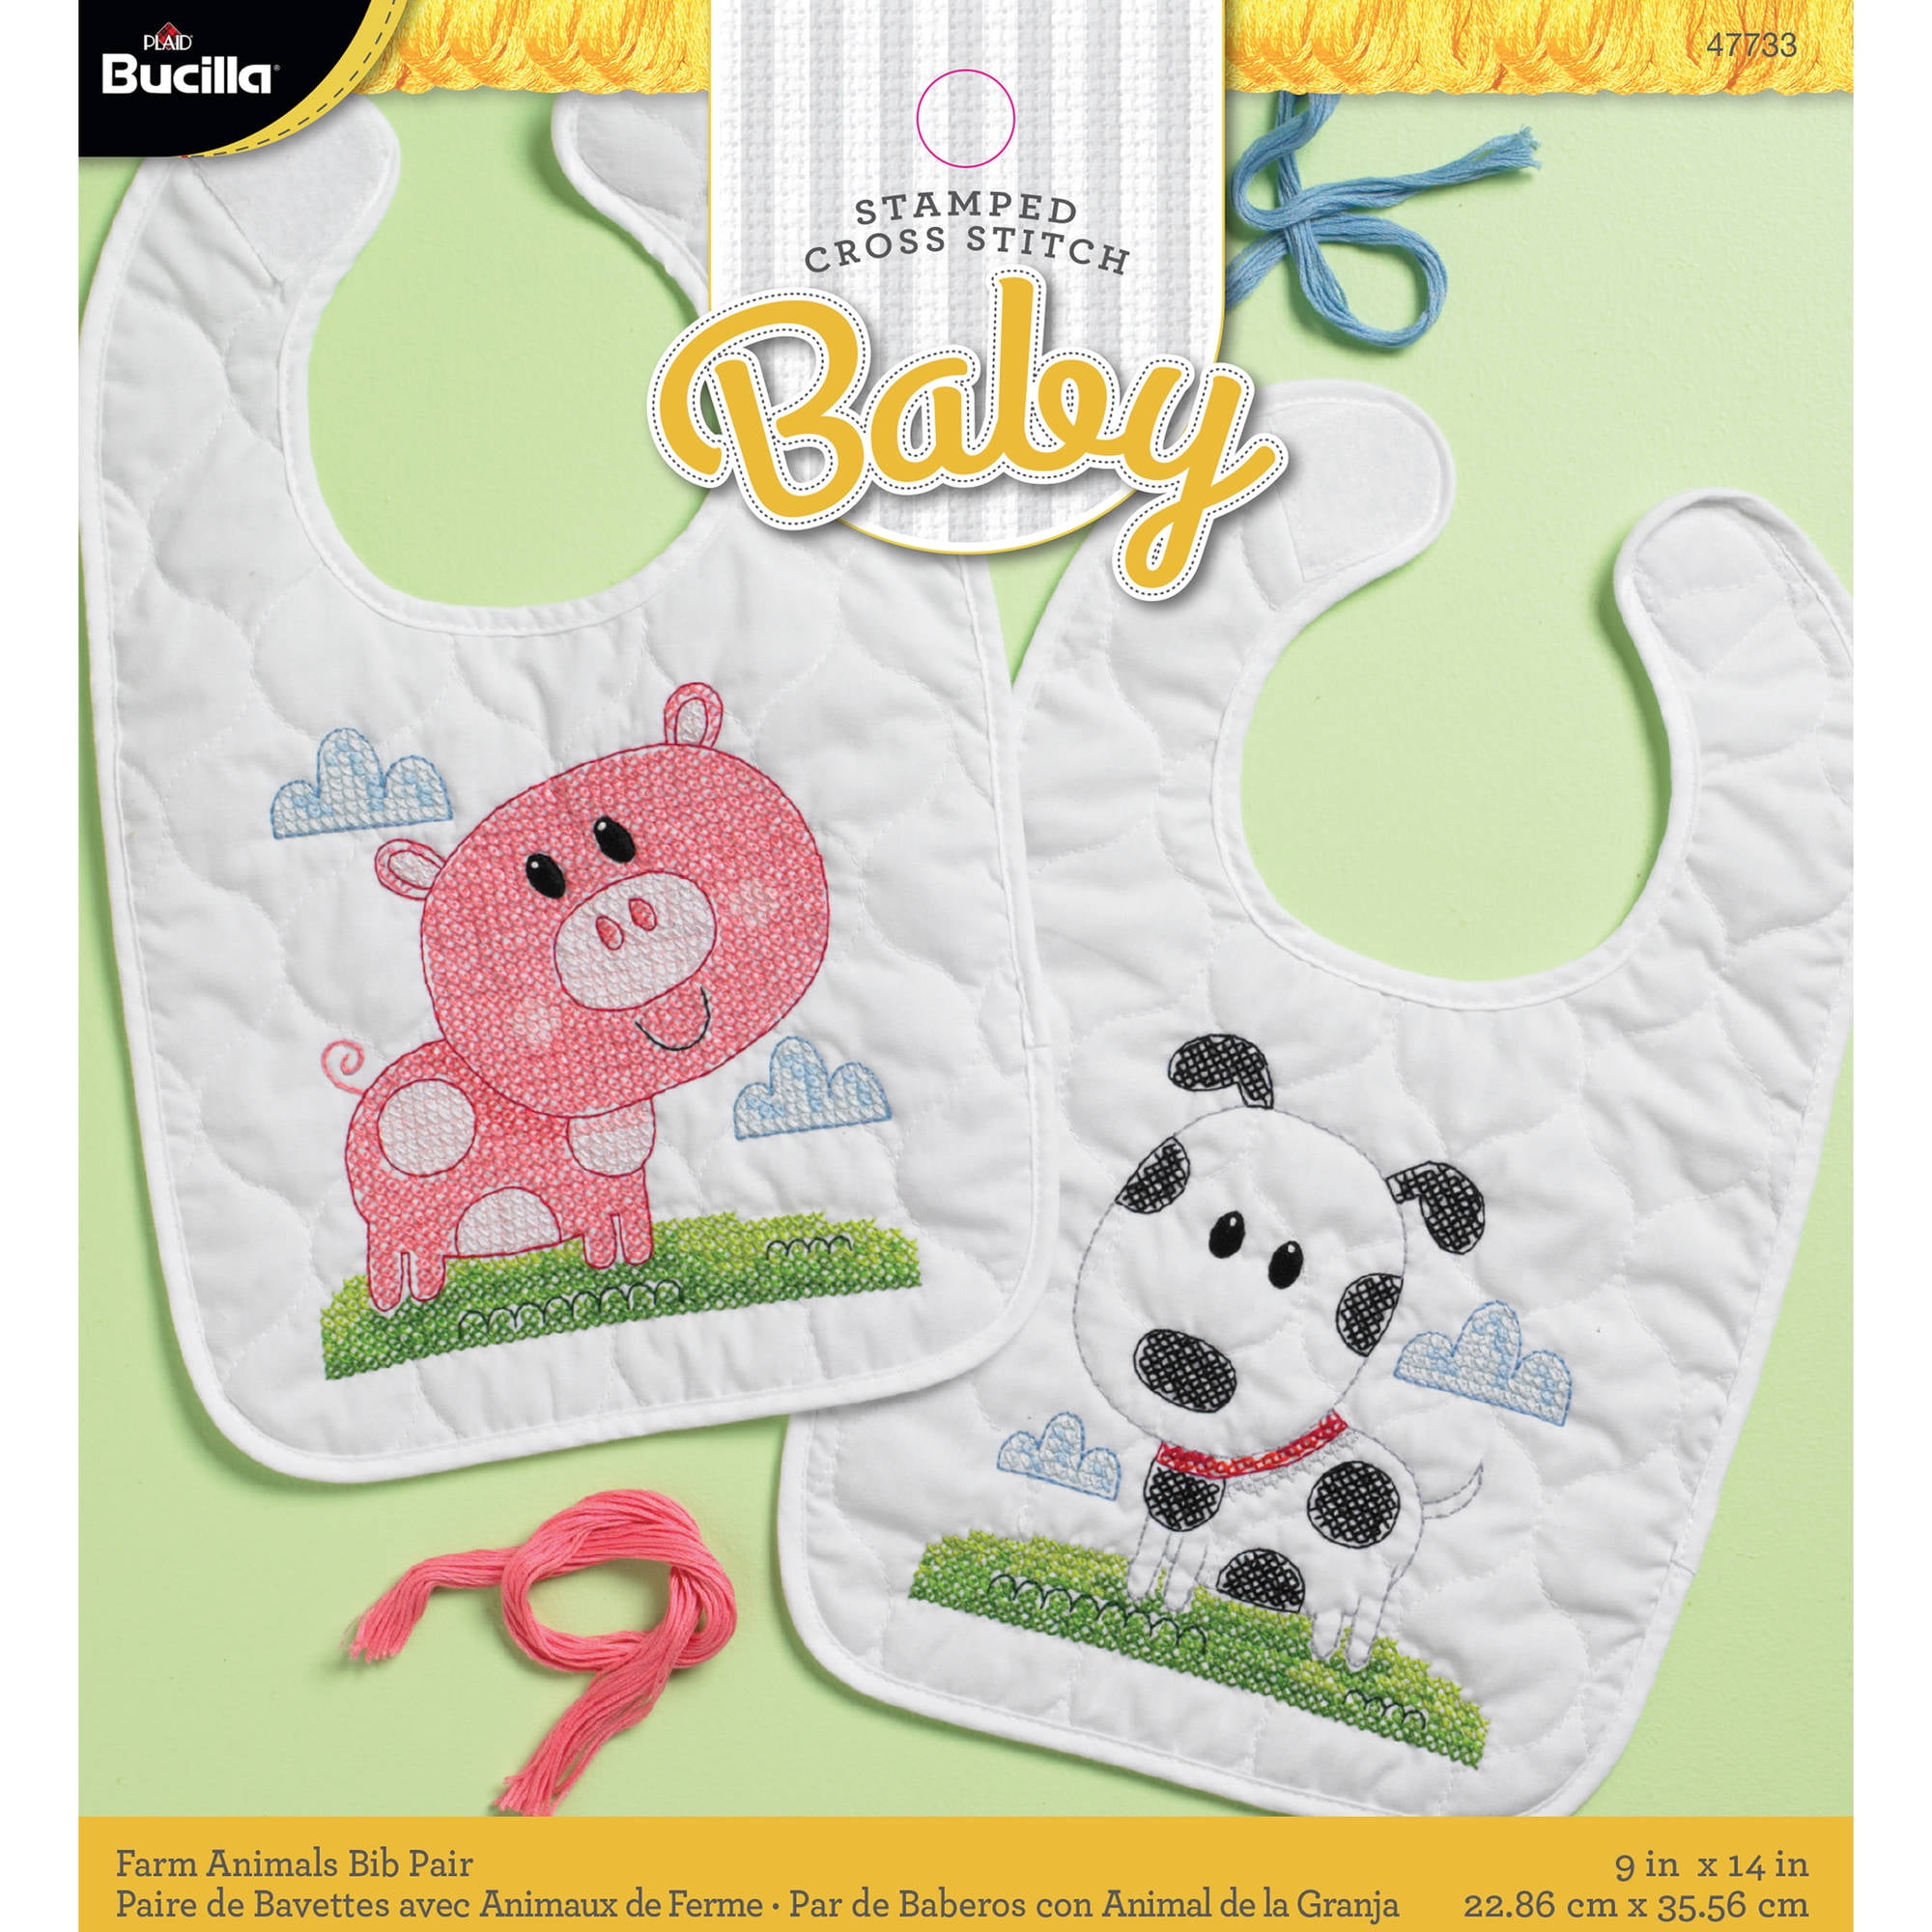 Shop Plaid Bucilla ® Baby - Stamped Cross Stitch - Crib Ensembles - ABC  Baby - Crib Cover - 47805 - 47805